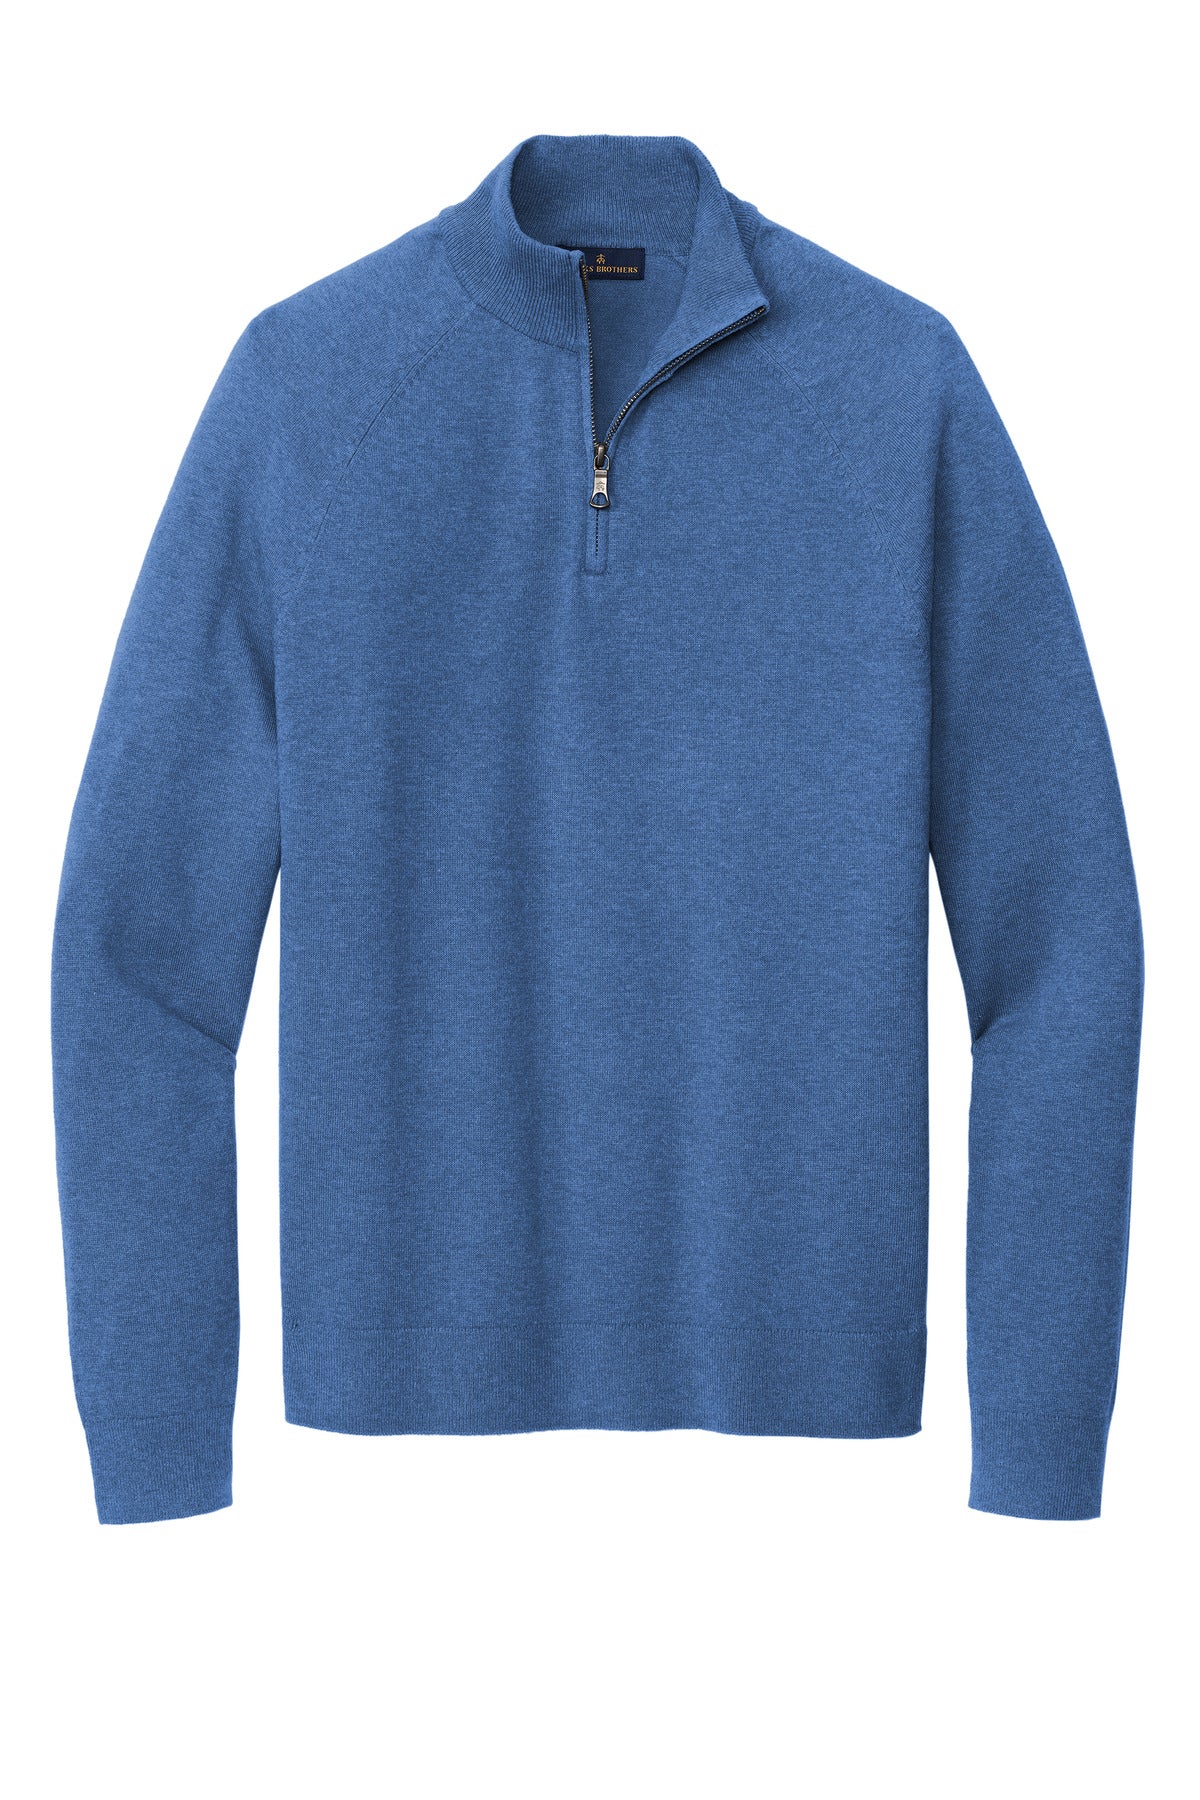 Brooks Brothers® Cotton Stretch 1/4-Zip Sweater BB18402